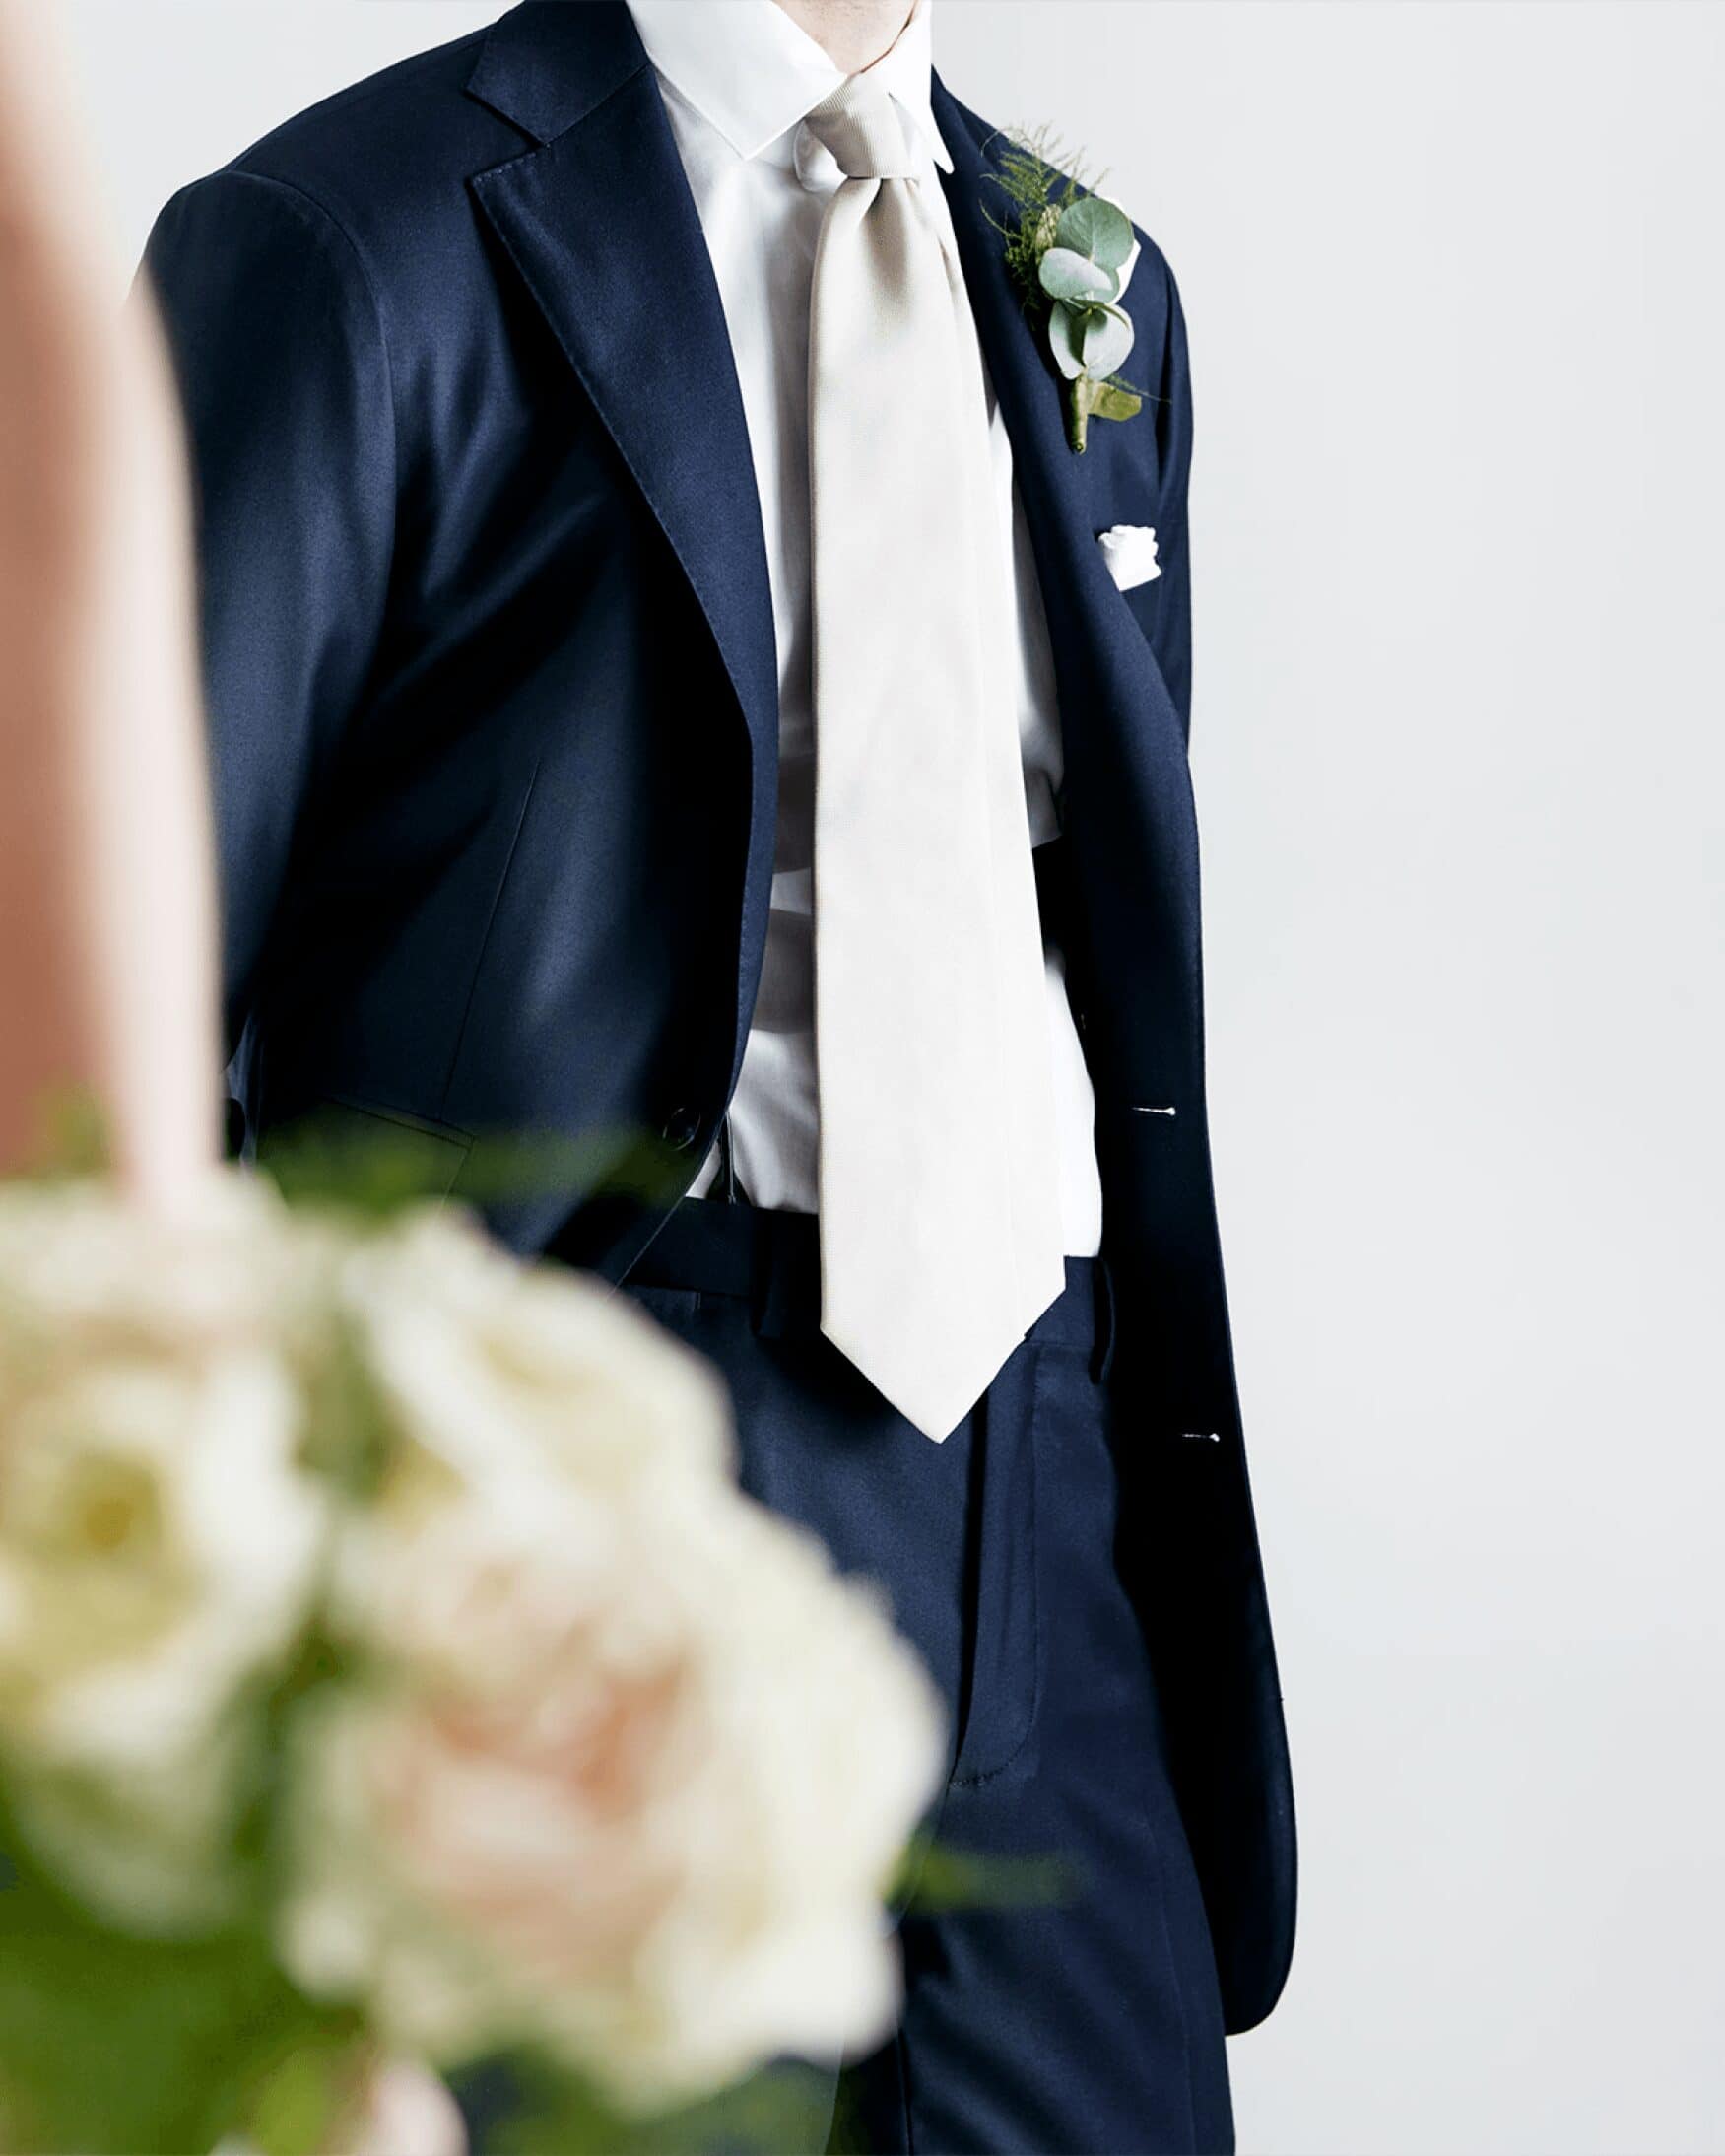 Dress codes for weddings